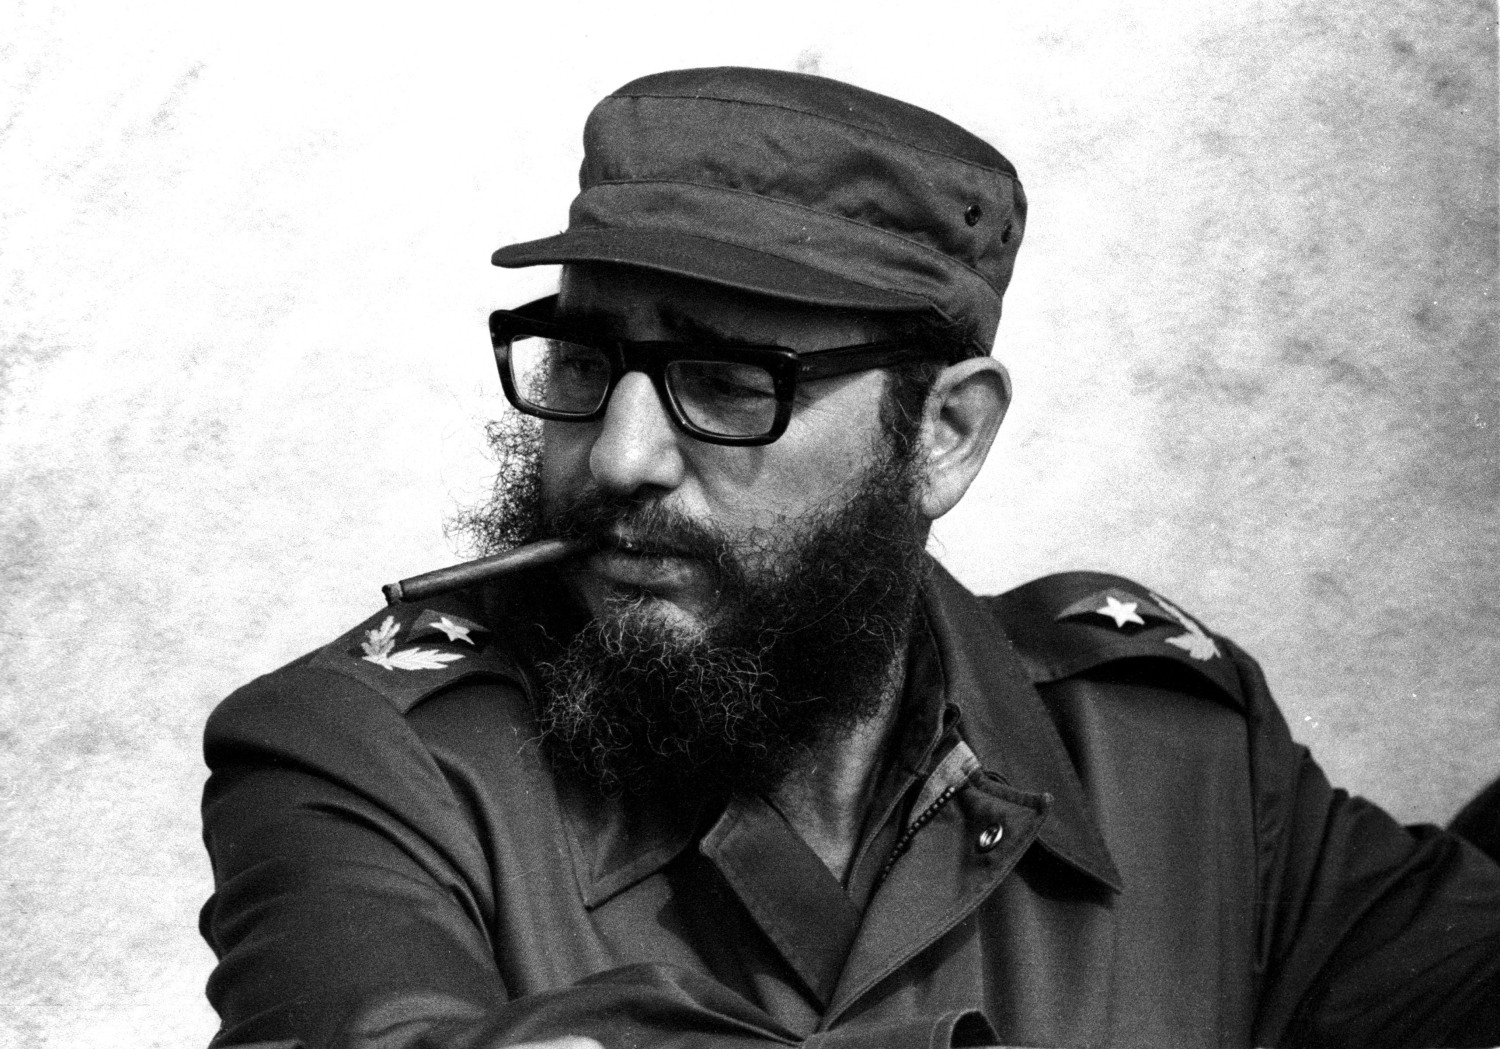 Fidel Castro, Cuban revolutionary and communist leader, dead at 90